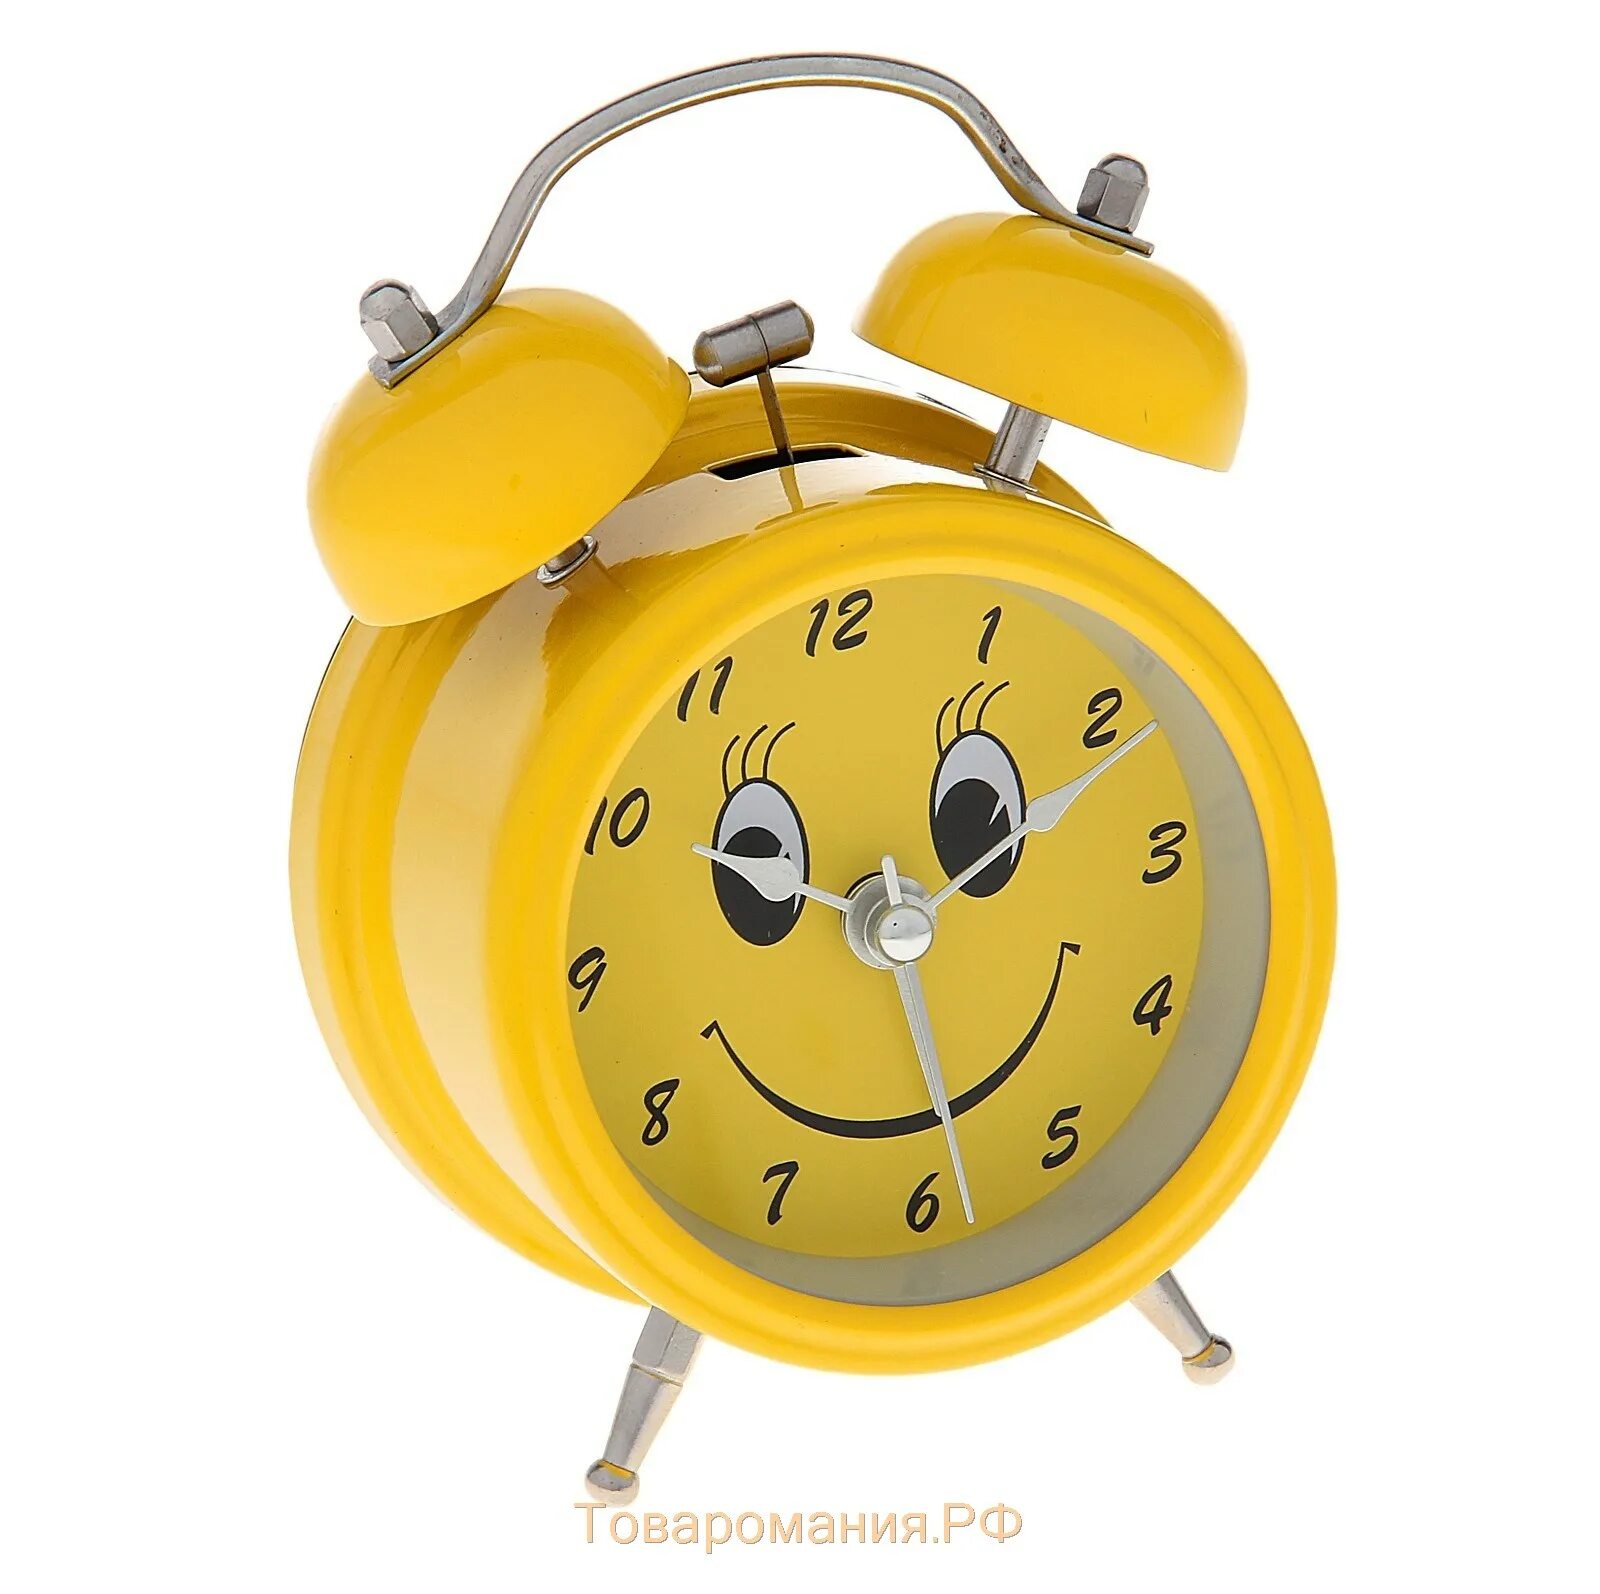 Часы будильник. Бульник. Часы будильник для детей. Настольные часы с будильником.